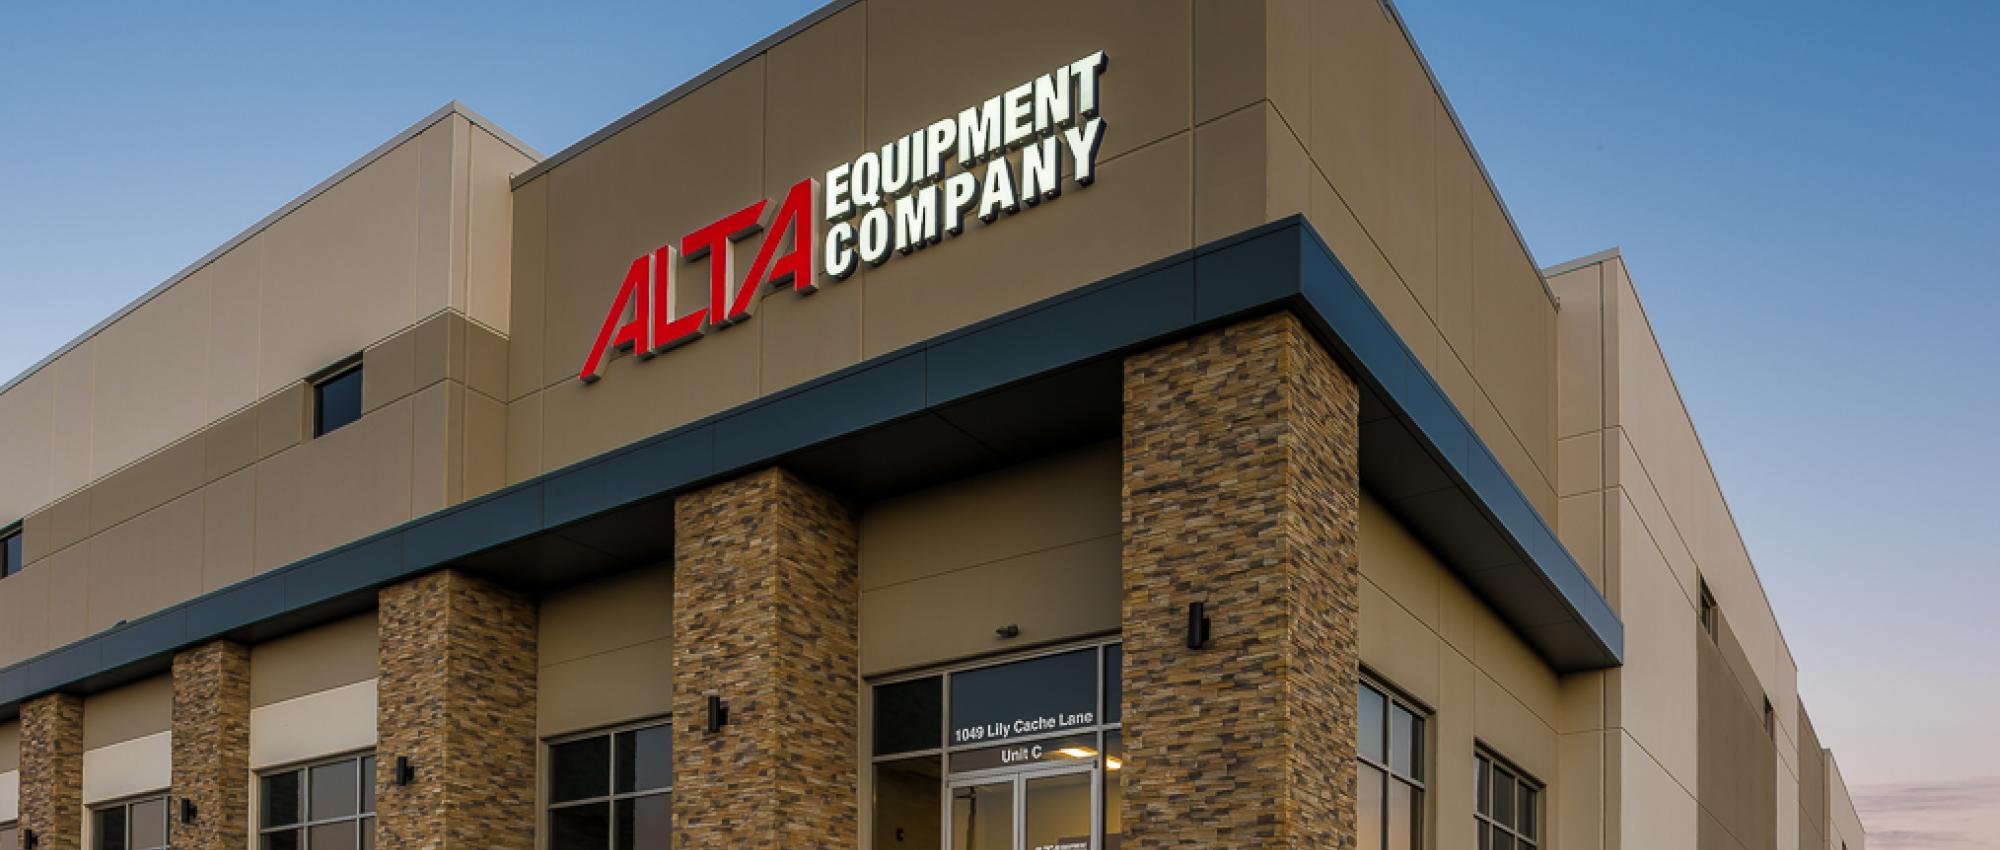 Alta Equipment Company building front